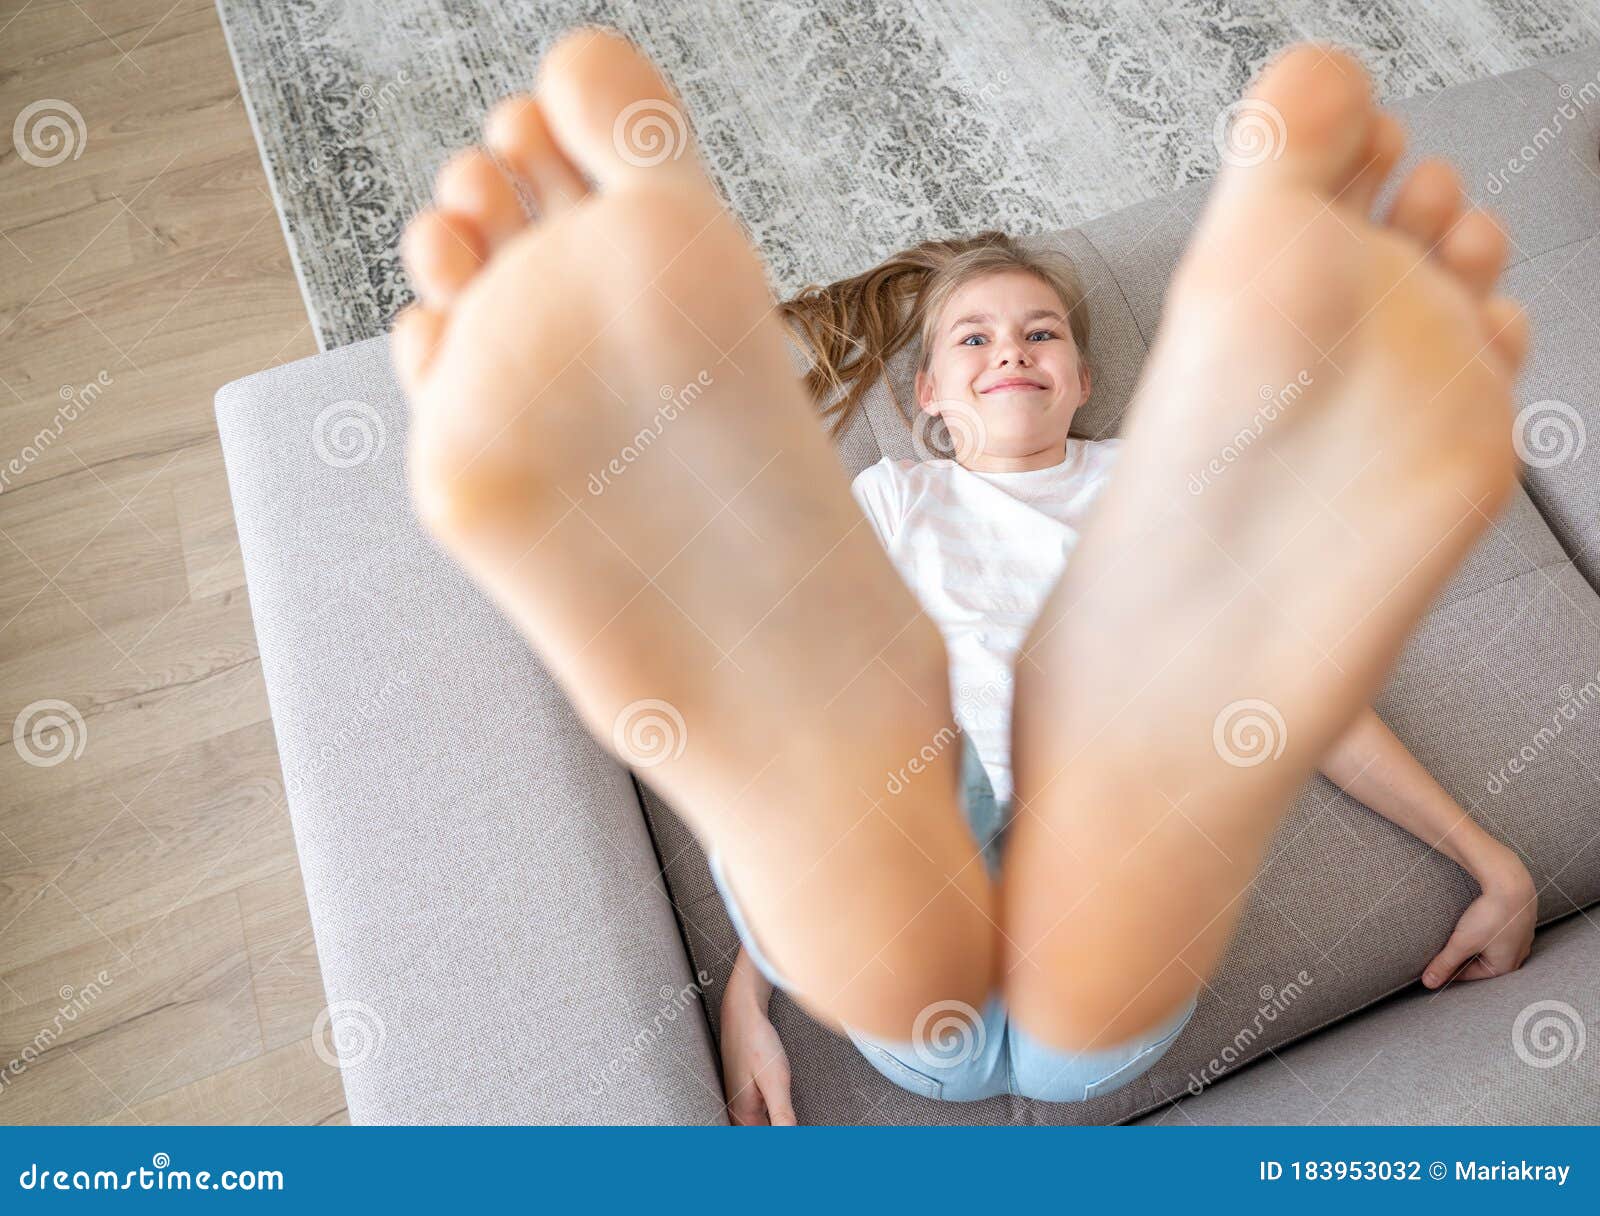 Big Teen Girl Naked Bare Foot